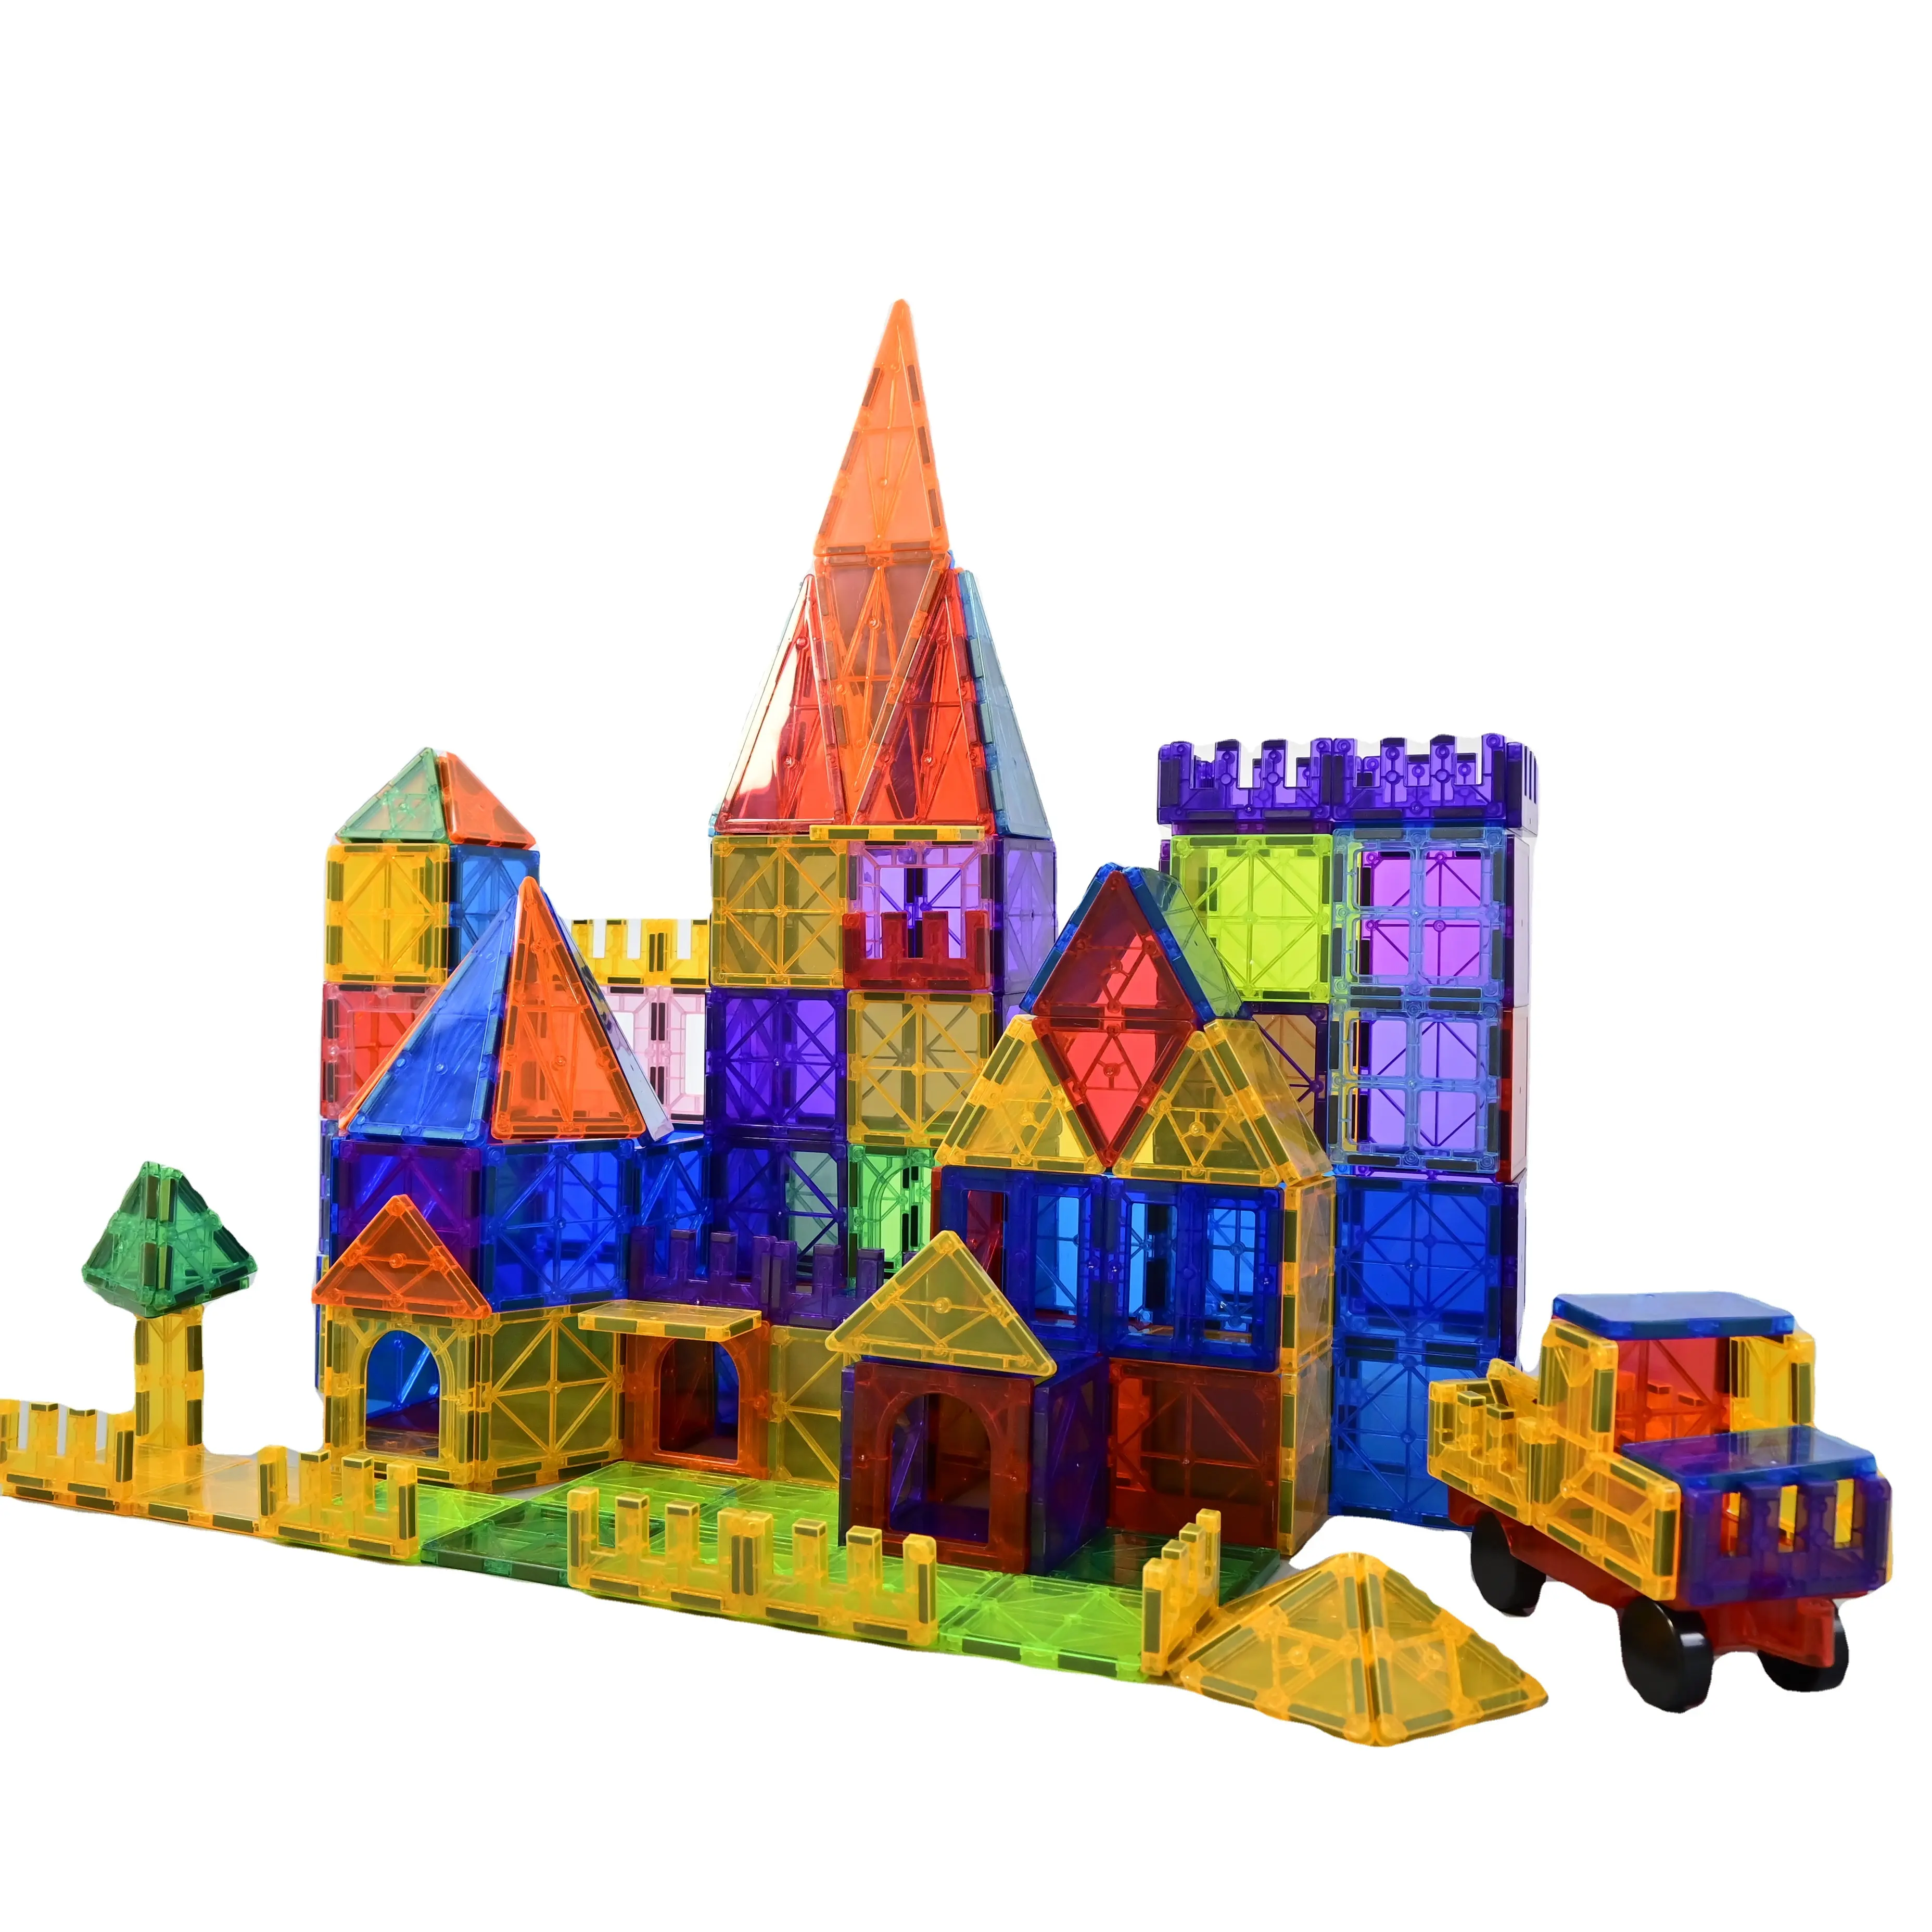 Magnetic Building Blocks 3D Construction Sets Kids Toys Educational 100 pcs Magnetic Tiles For Kids Learning